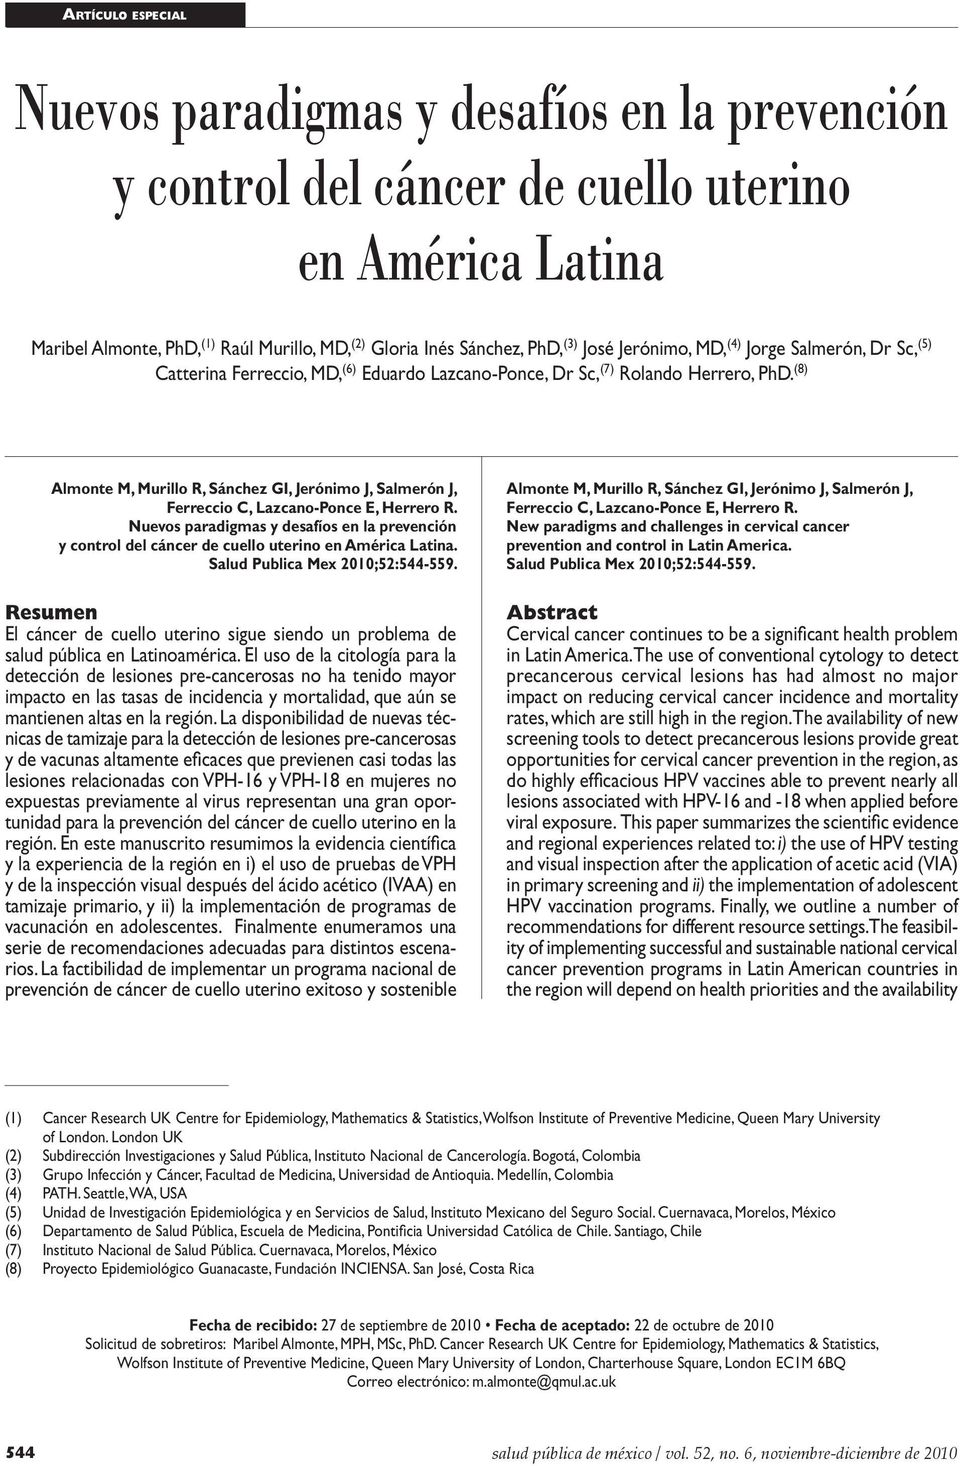 (4) Jorge Salmerón, Dr Sc, (5) Catterina Ferreccio, MD, (6) Eduardo Lazcano-Ponce, Dr Sc, (7) Rolando Herrero, PhD.